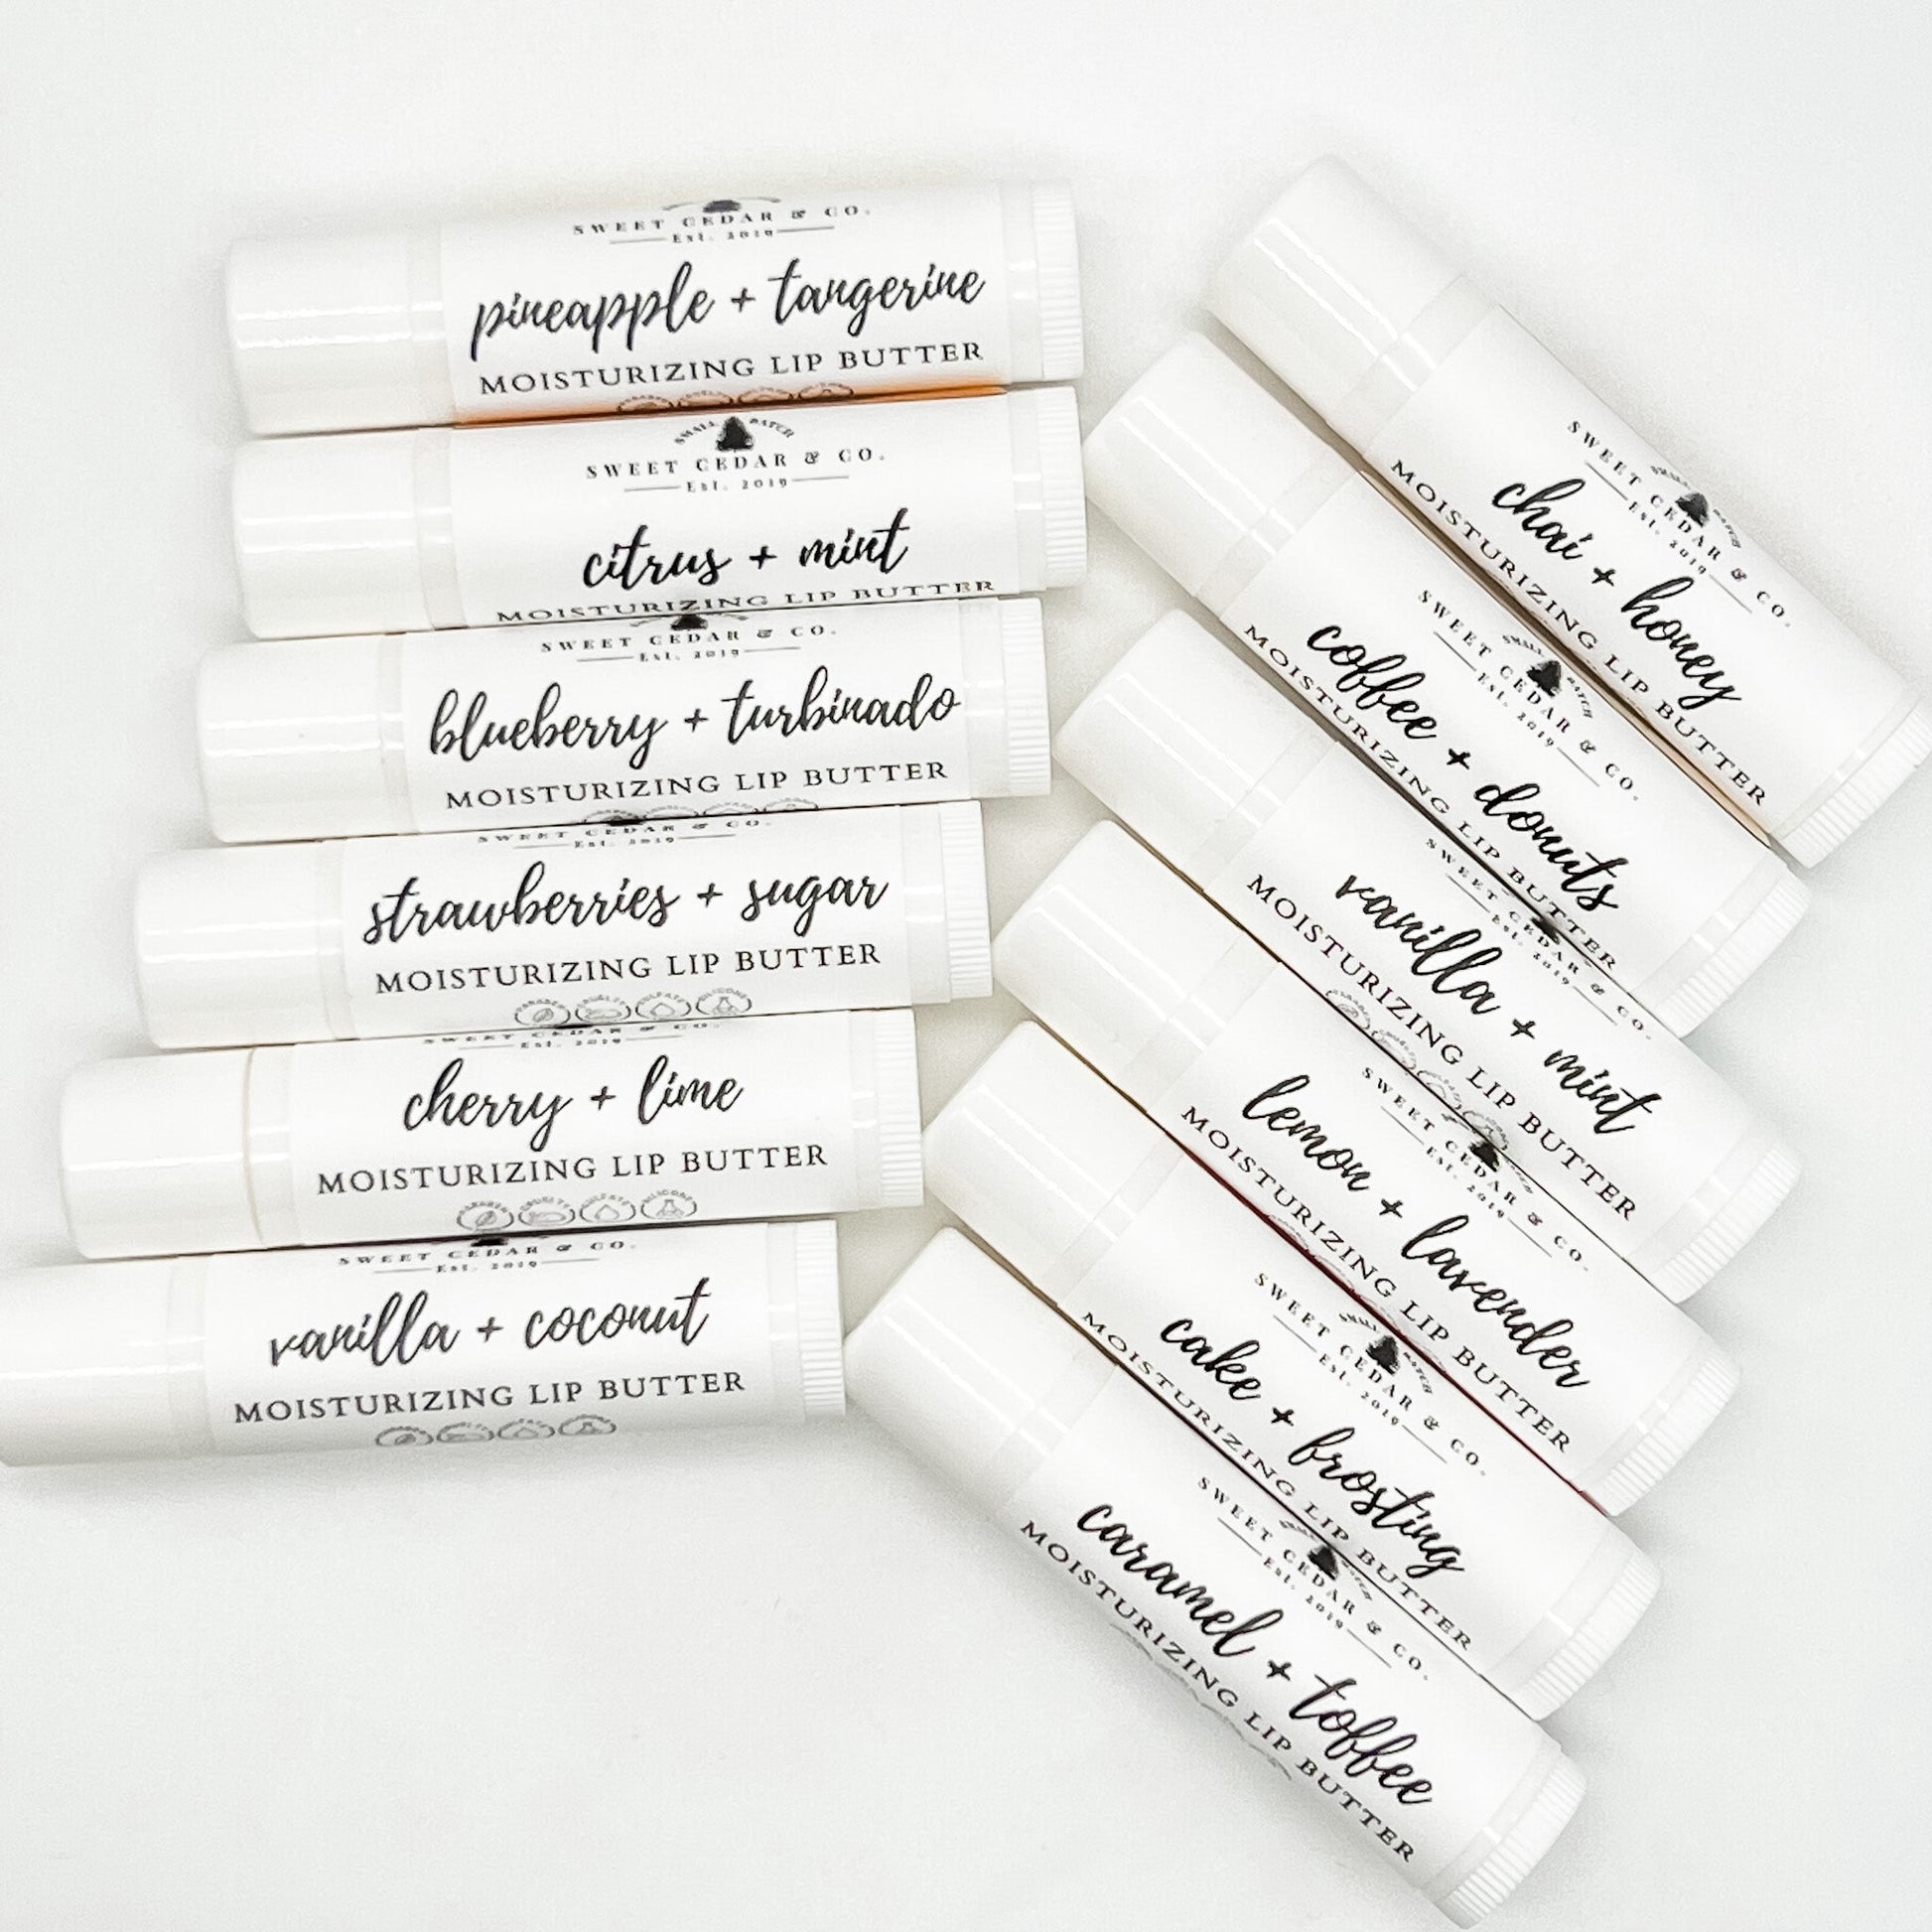 moisturizing lip butter - Sweet Cedar